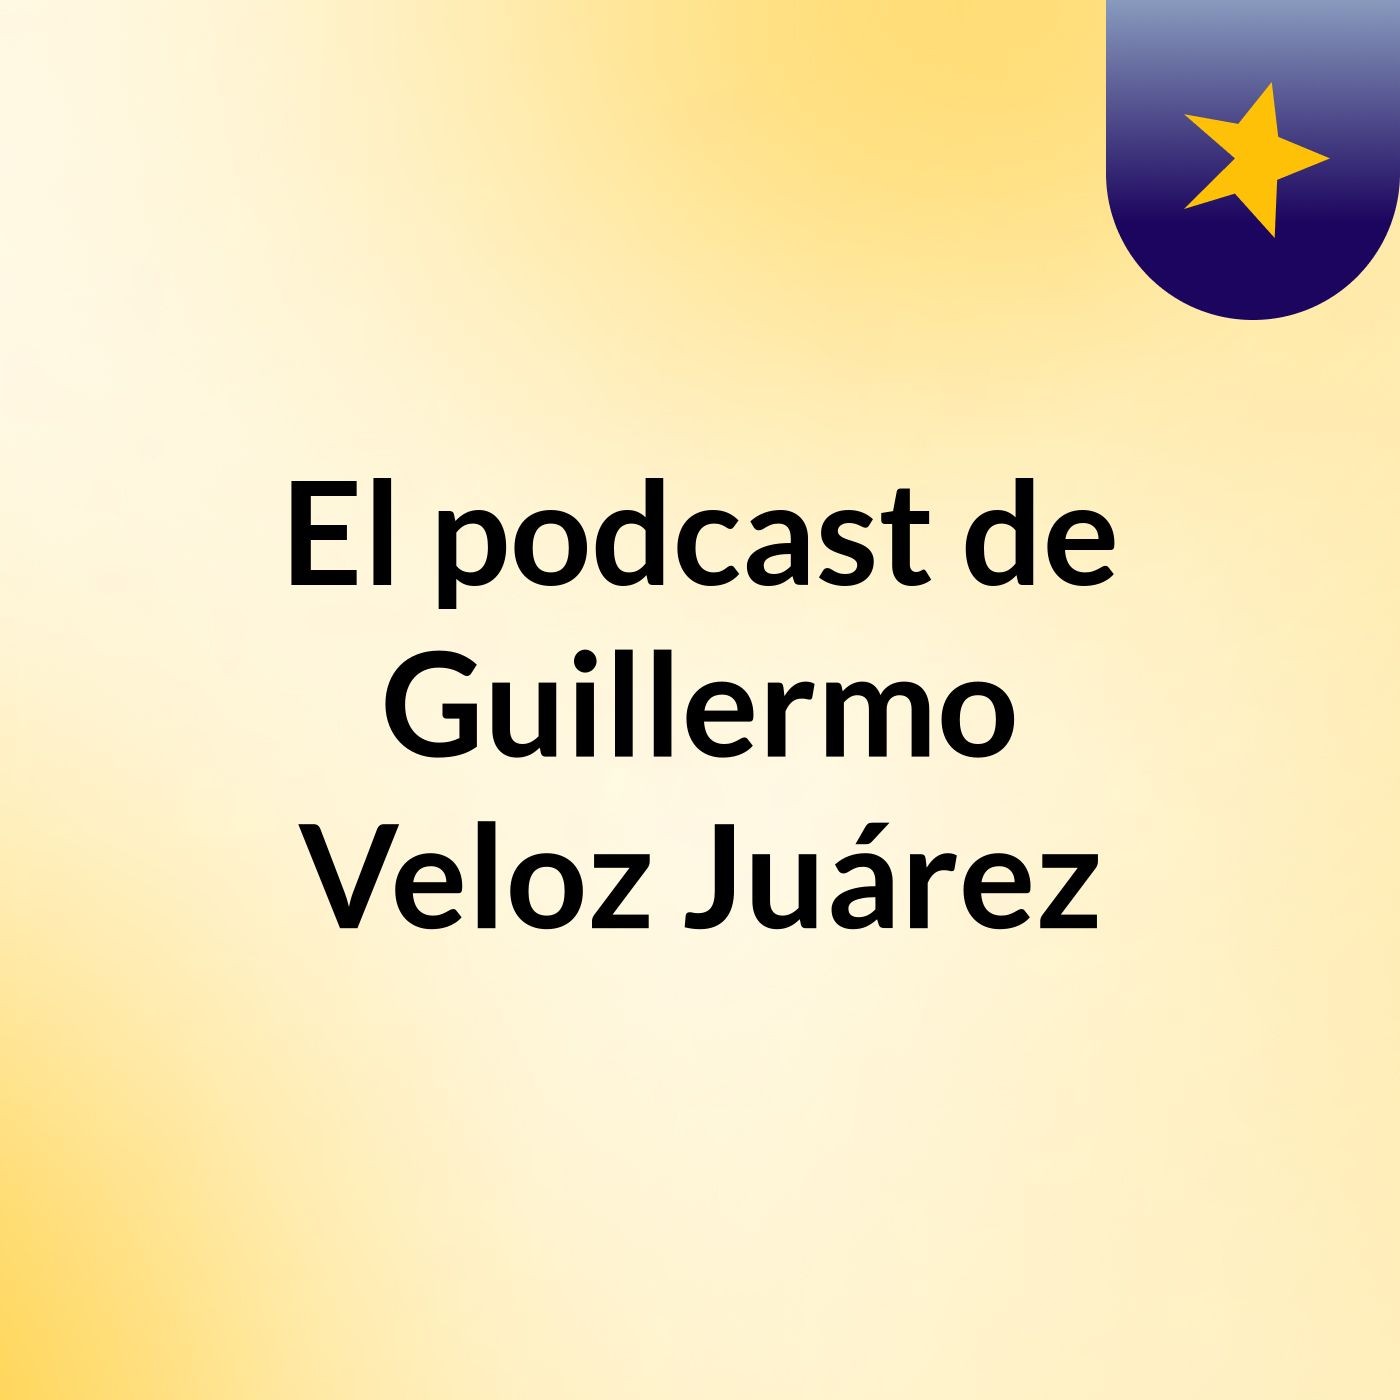 El podcast de Guillermo Veloz Juárez